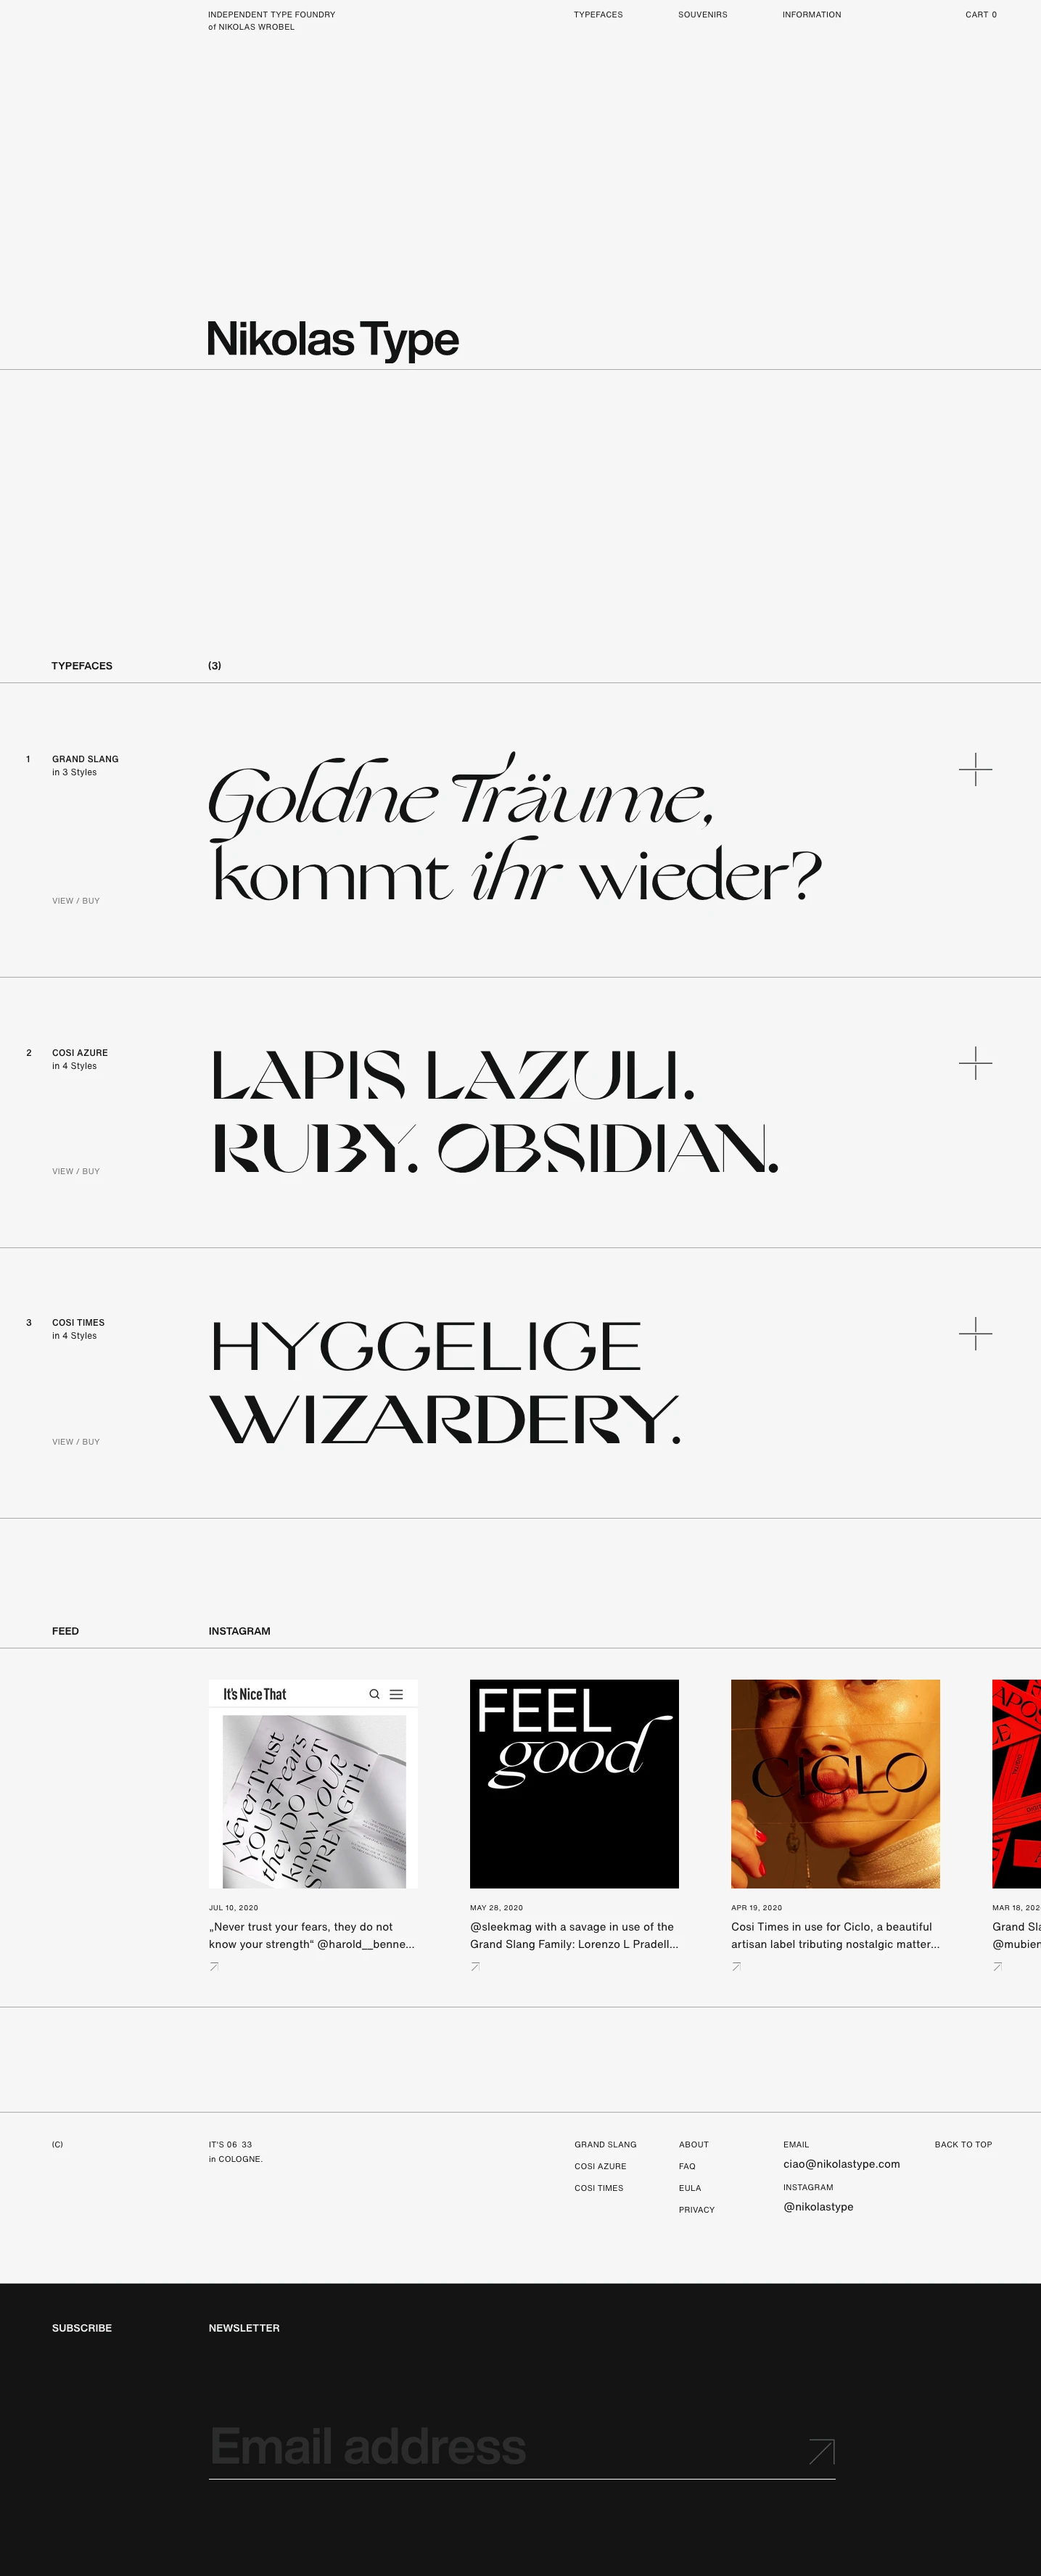 Nikolas Type Landing Page Example: Nikolas Type is the independent type foundry of Nikolas Wrobel, creating retail and bespoke typefaces for analog and digital media.